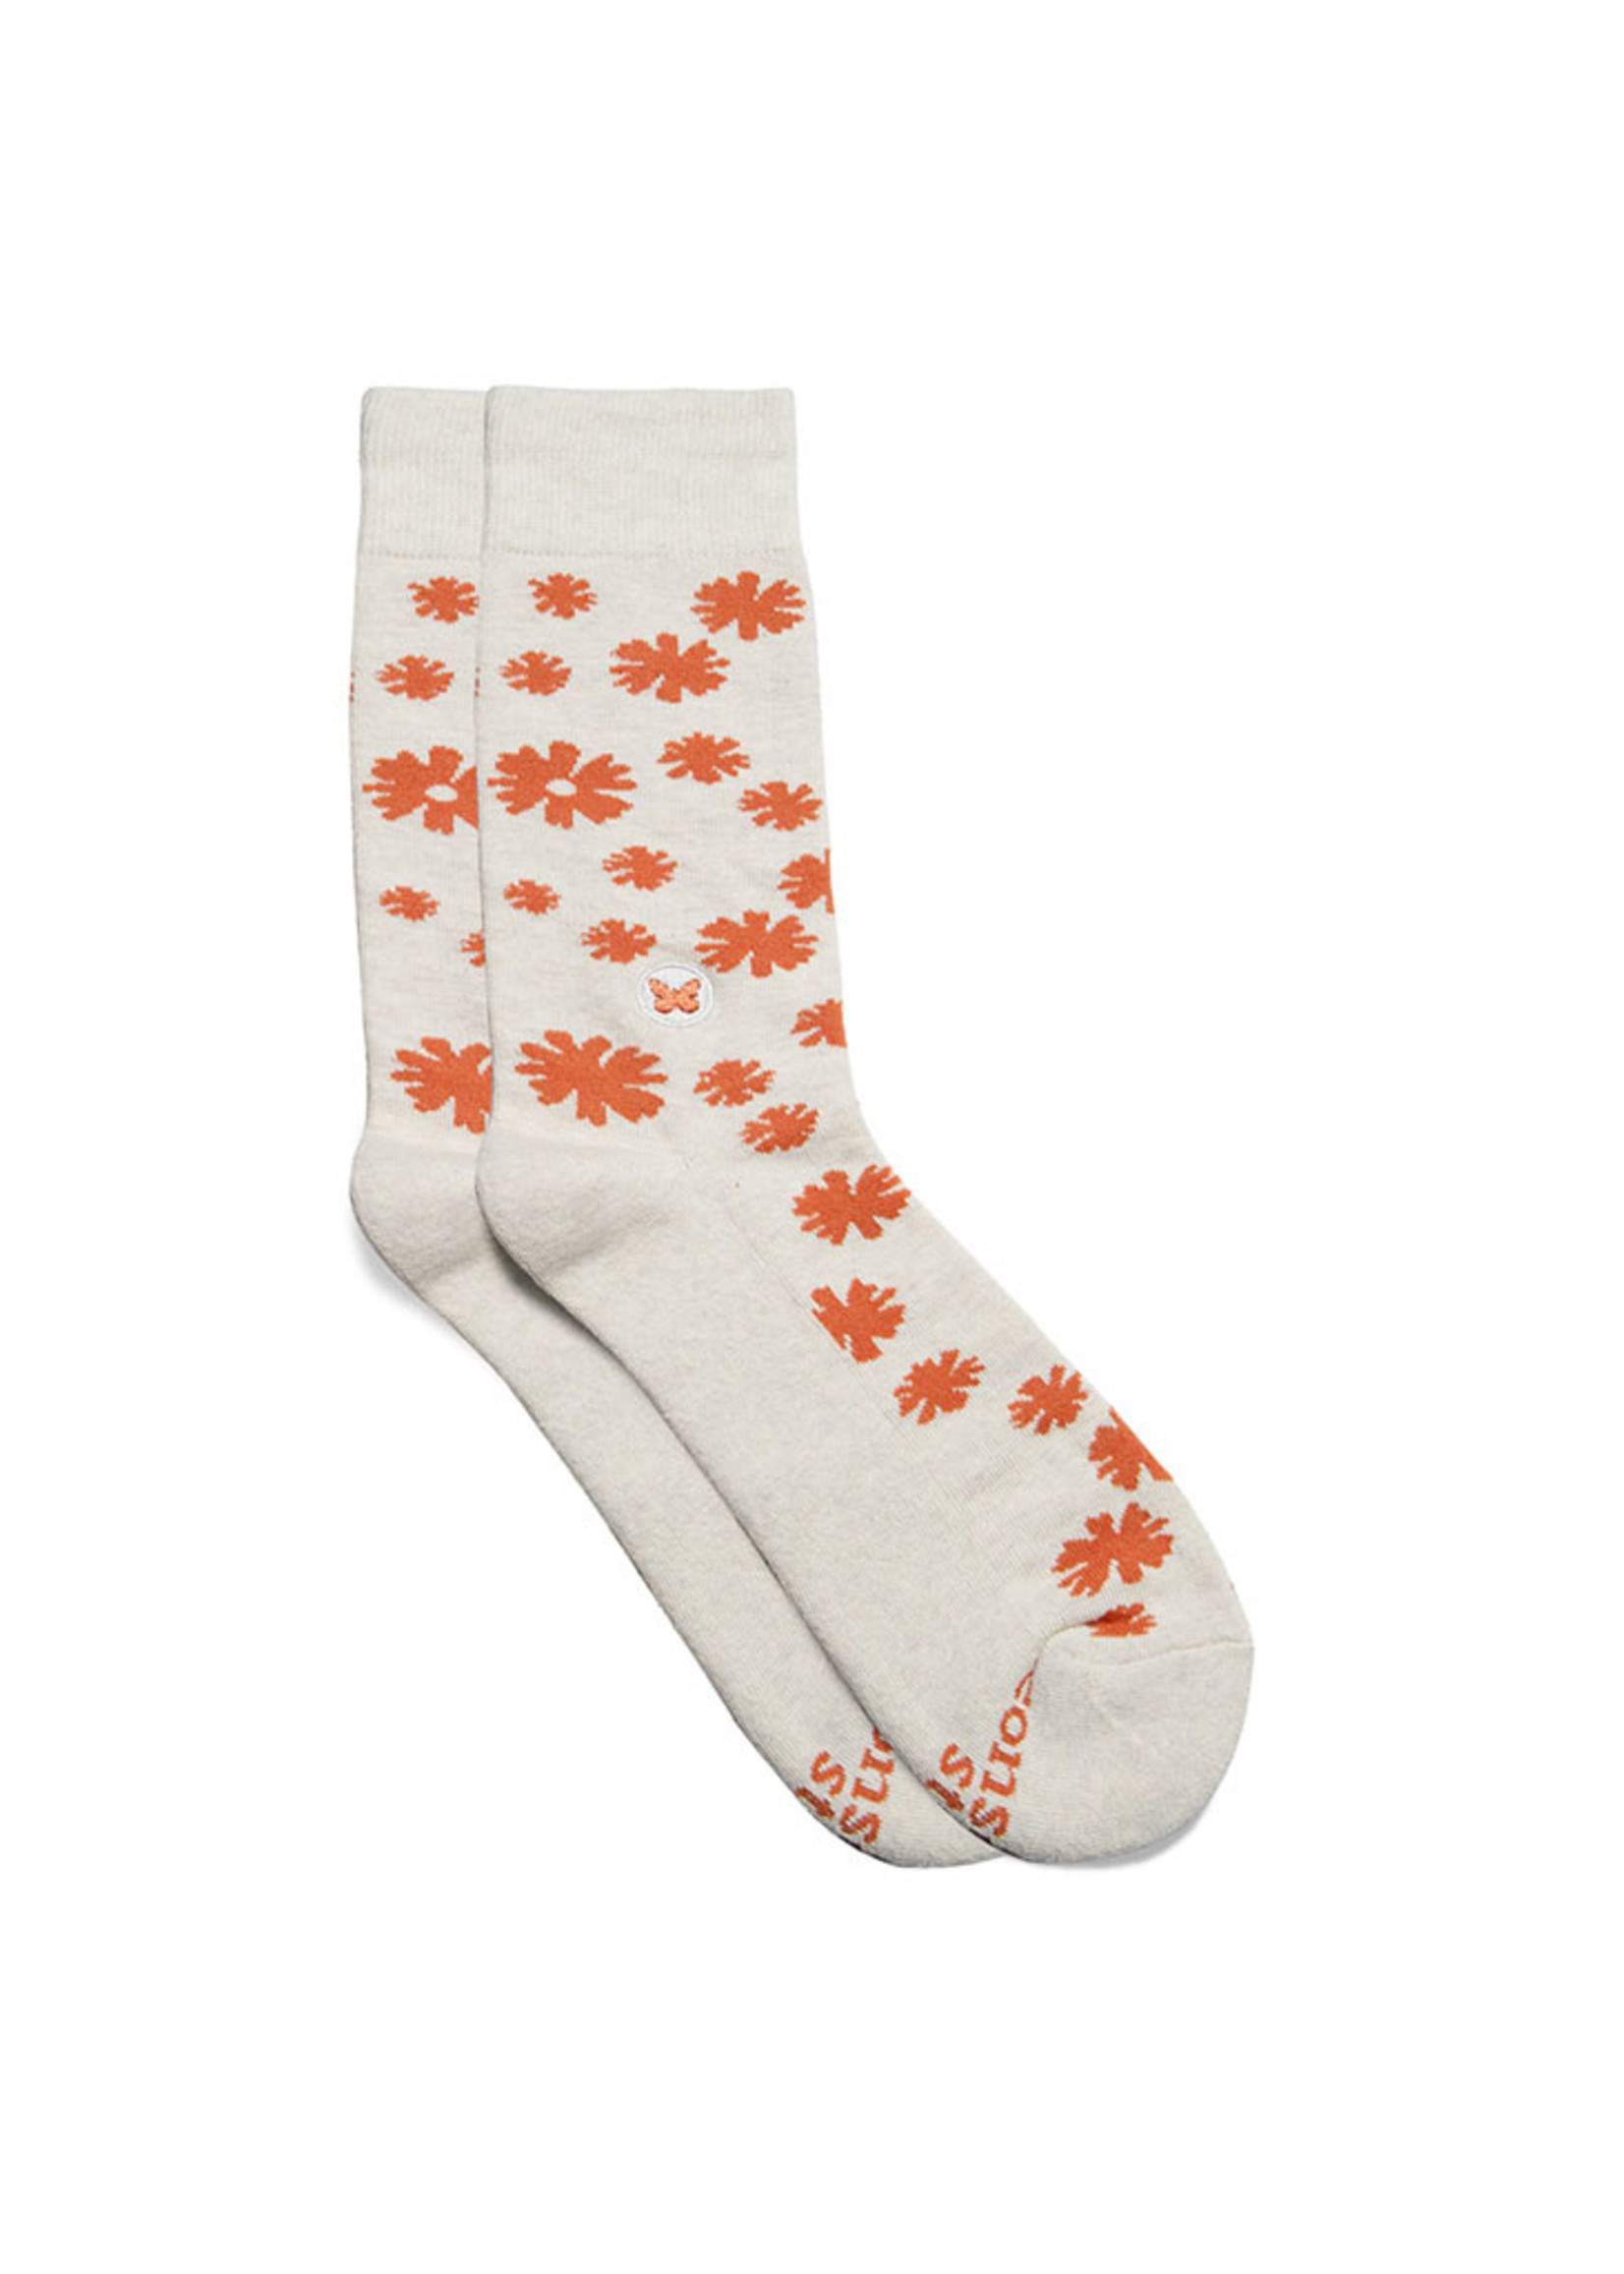 Conscious Step Women's Orange Flower Socks - Stop Violence Against Women